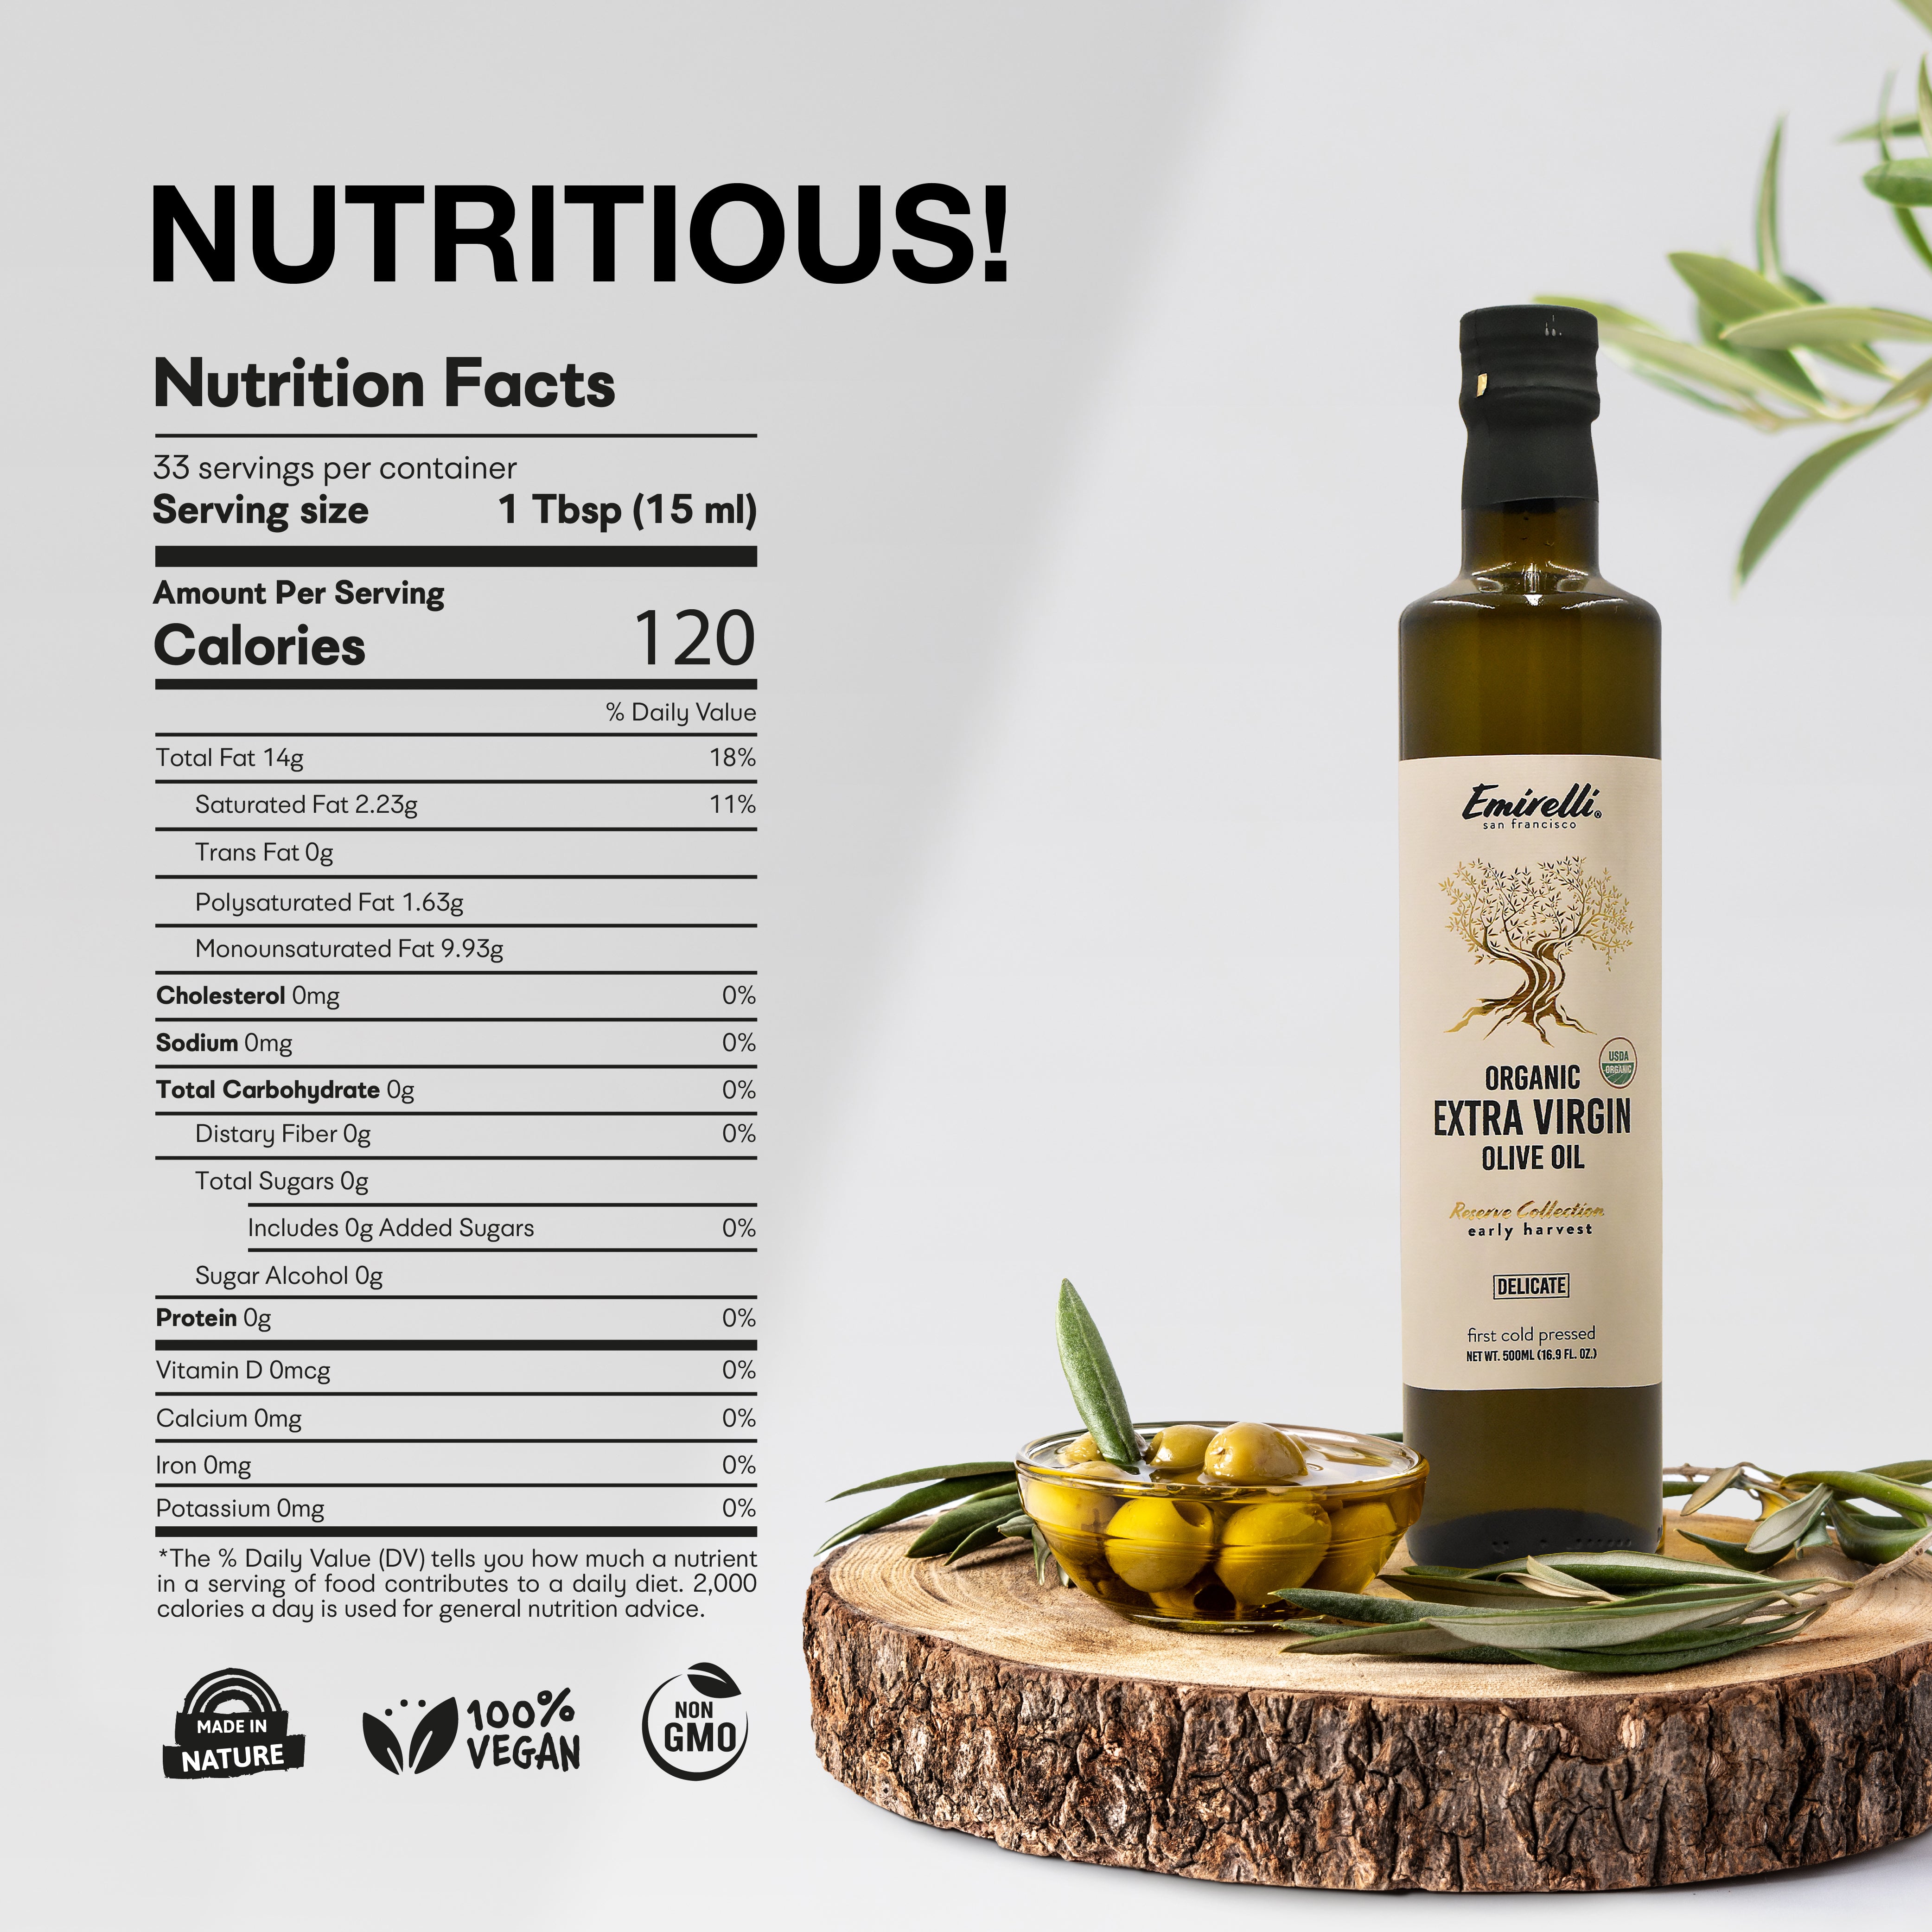 Emirelli Organic Extra Virgin Olive Oil - Delicate Intense